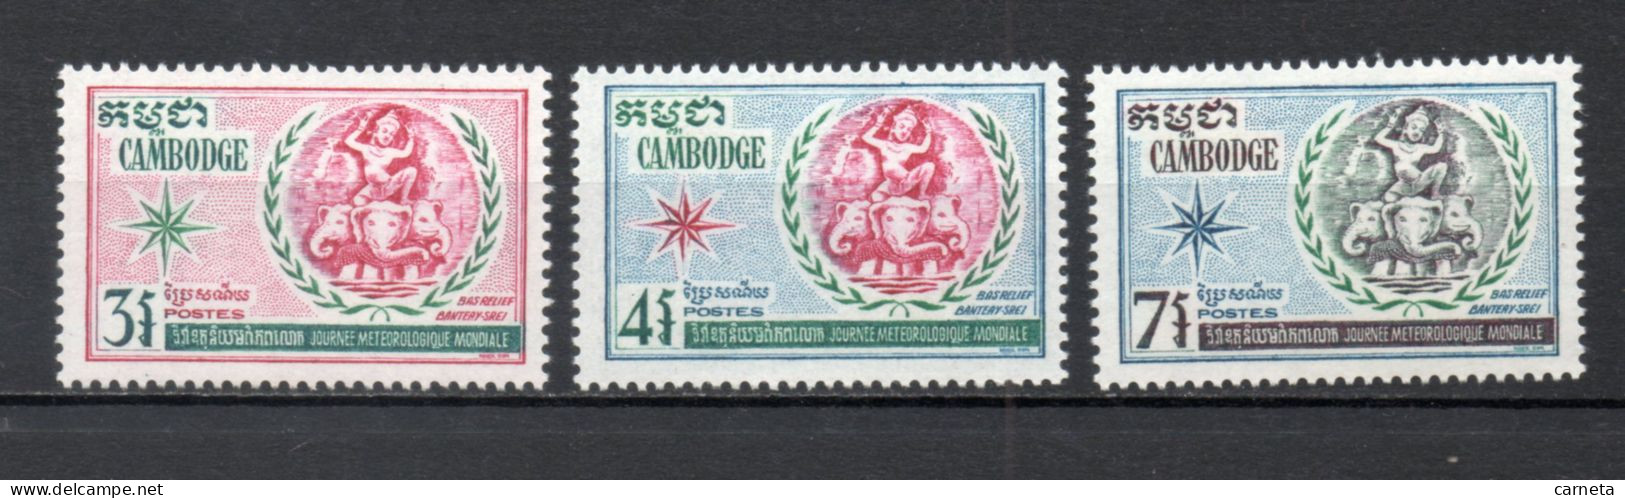 CAMBODGE  N° 249 à 251   NEUFS SANS CHARNIERE   COTE  2.00€    METEOROLOGIE - Cambodja